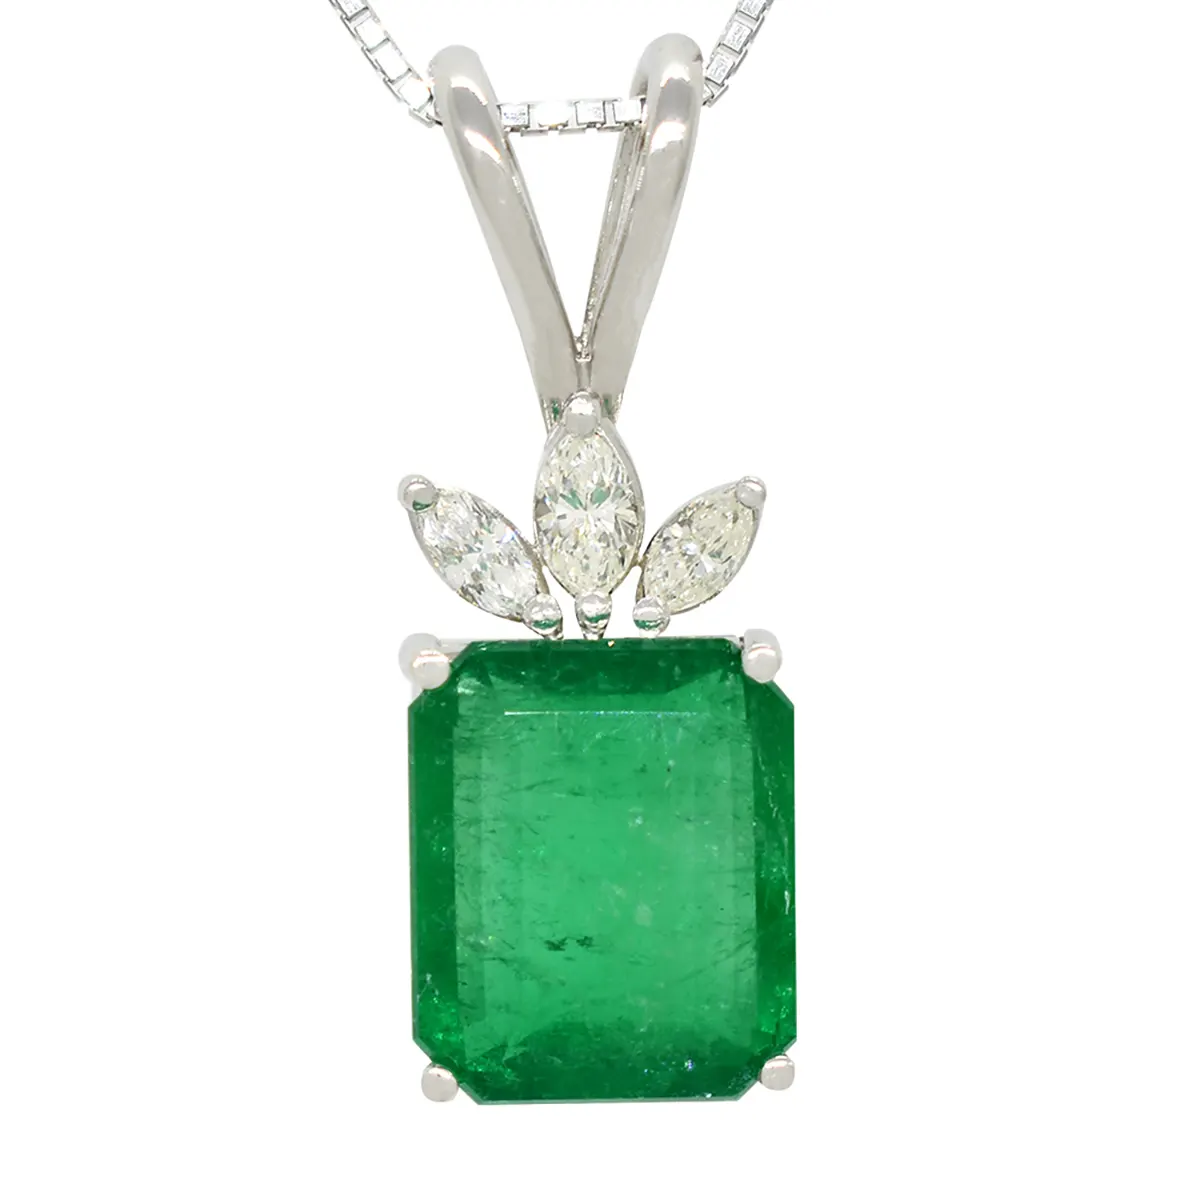 emerald-and-diamond-pendant-in-18k-white-gold-with-emerald-cut-emerald-and-marquise-shape-diamonds